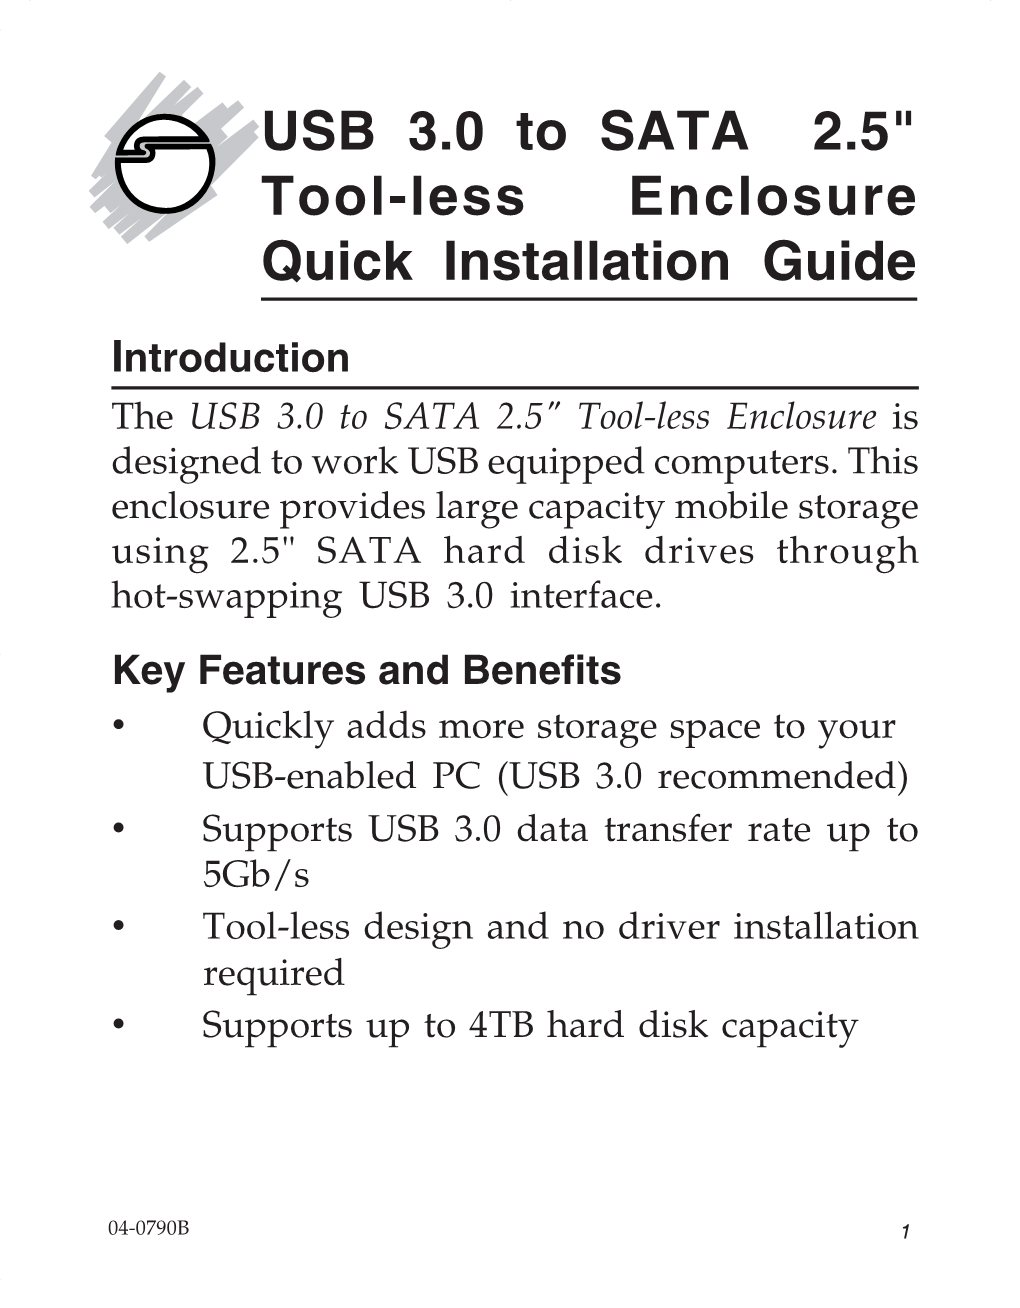 USB 3.0 to SATA 2.5" Tool-Less Enclosure Quick Installation Guide